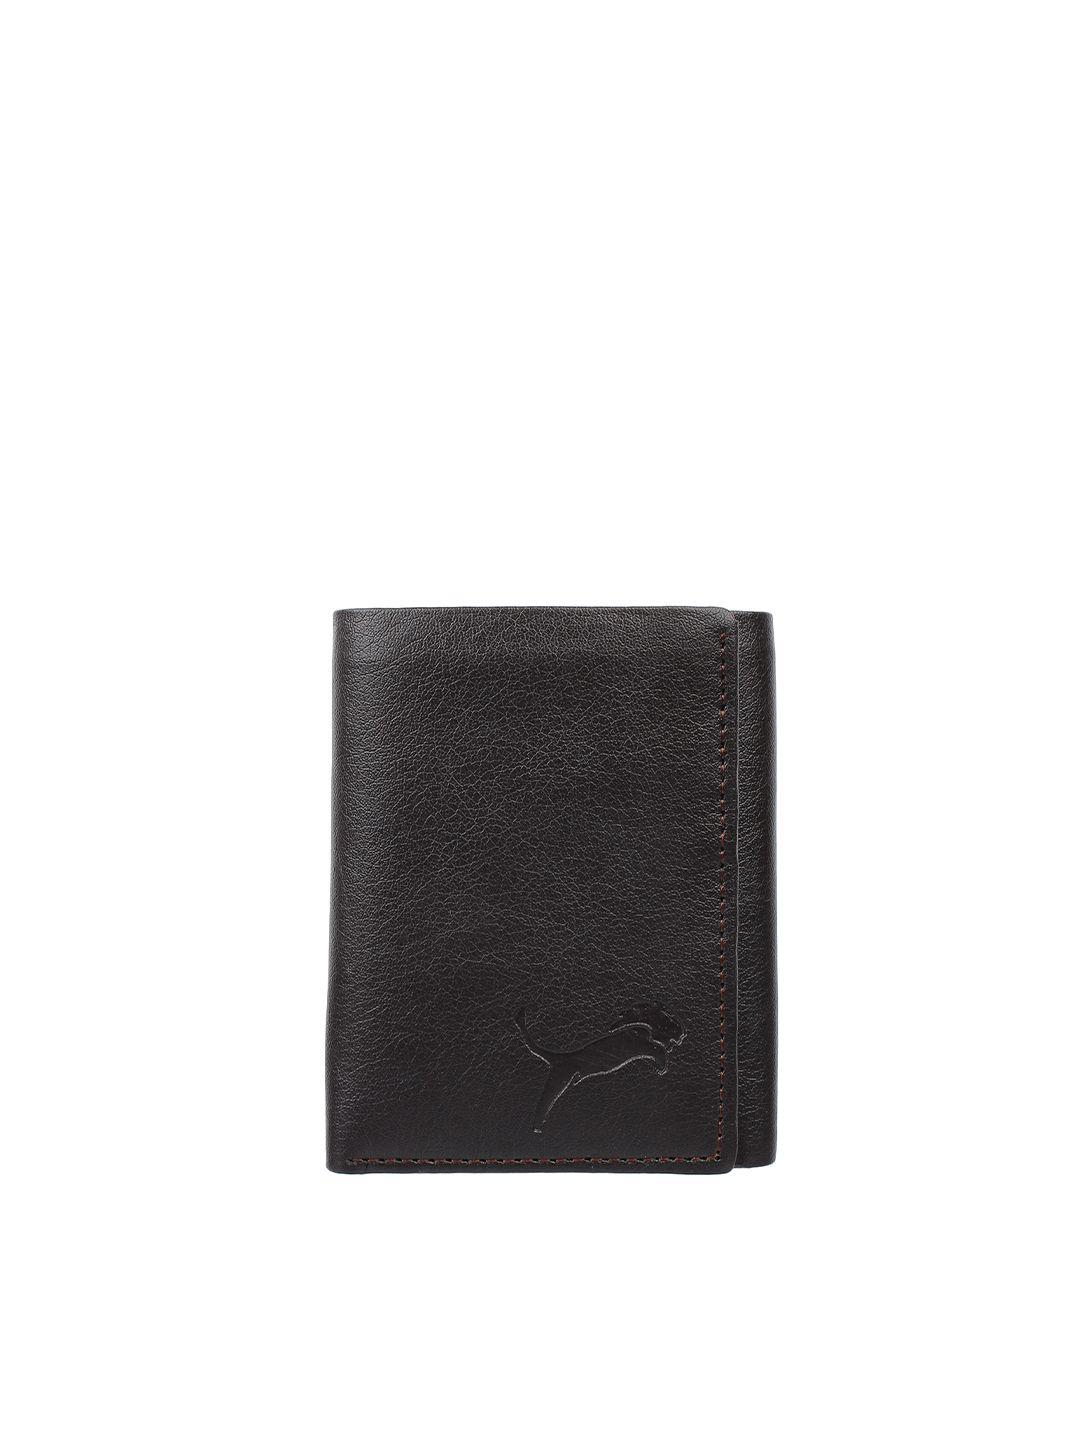 wild edge men brown leather three fold wallet